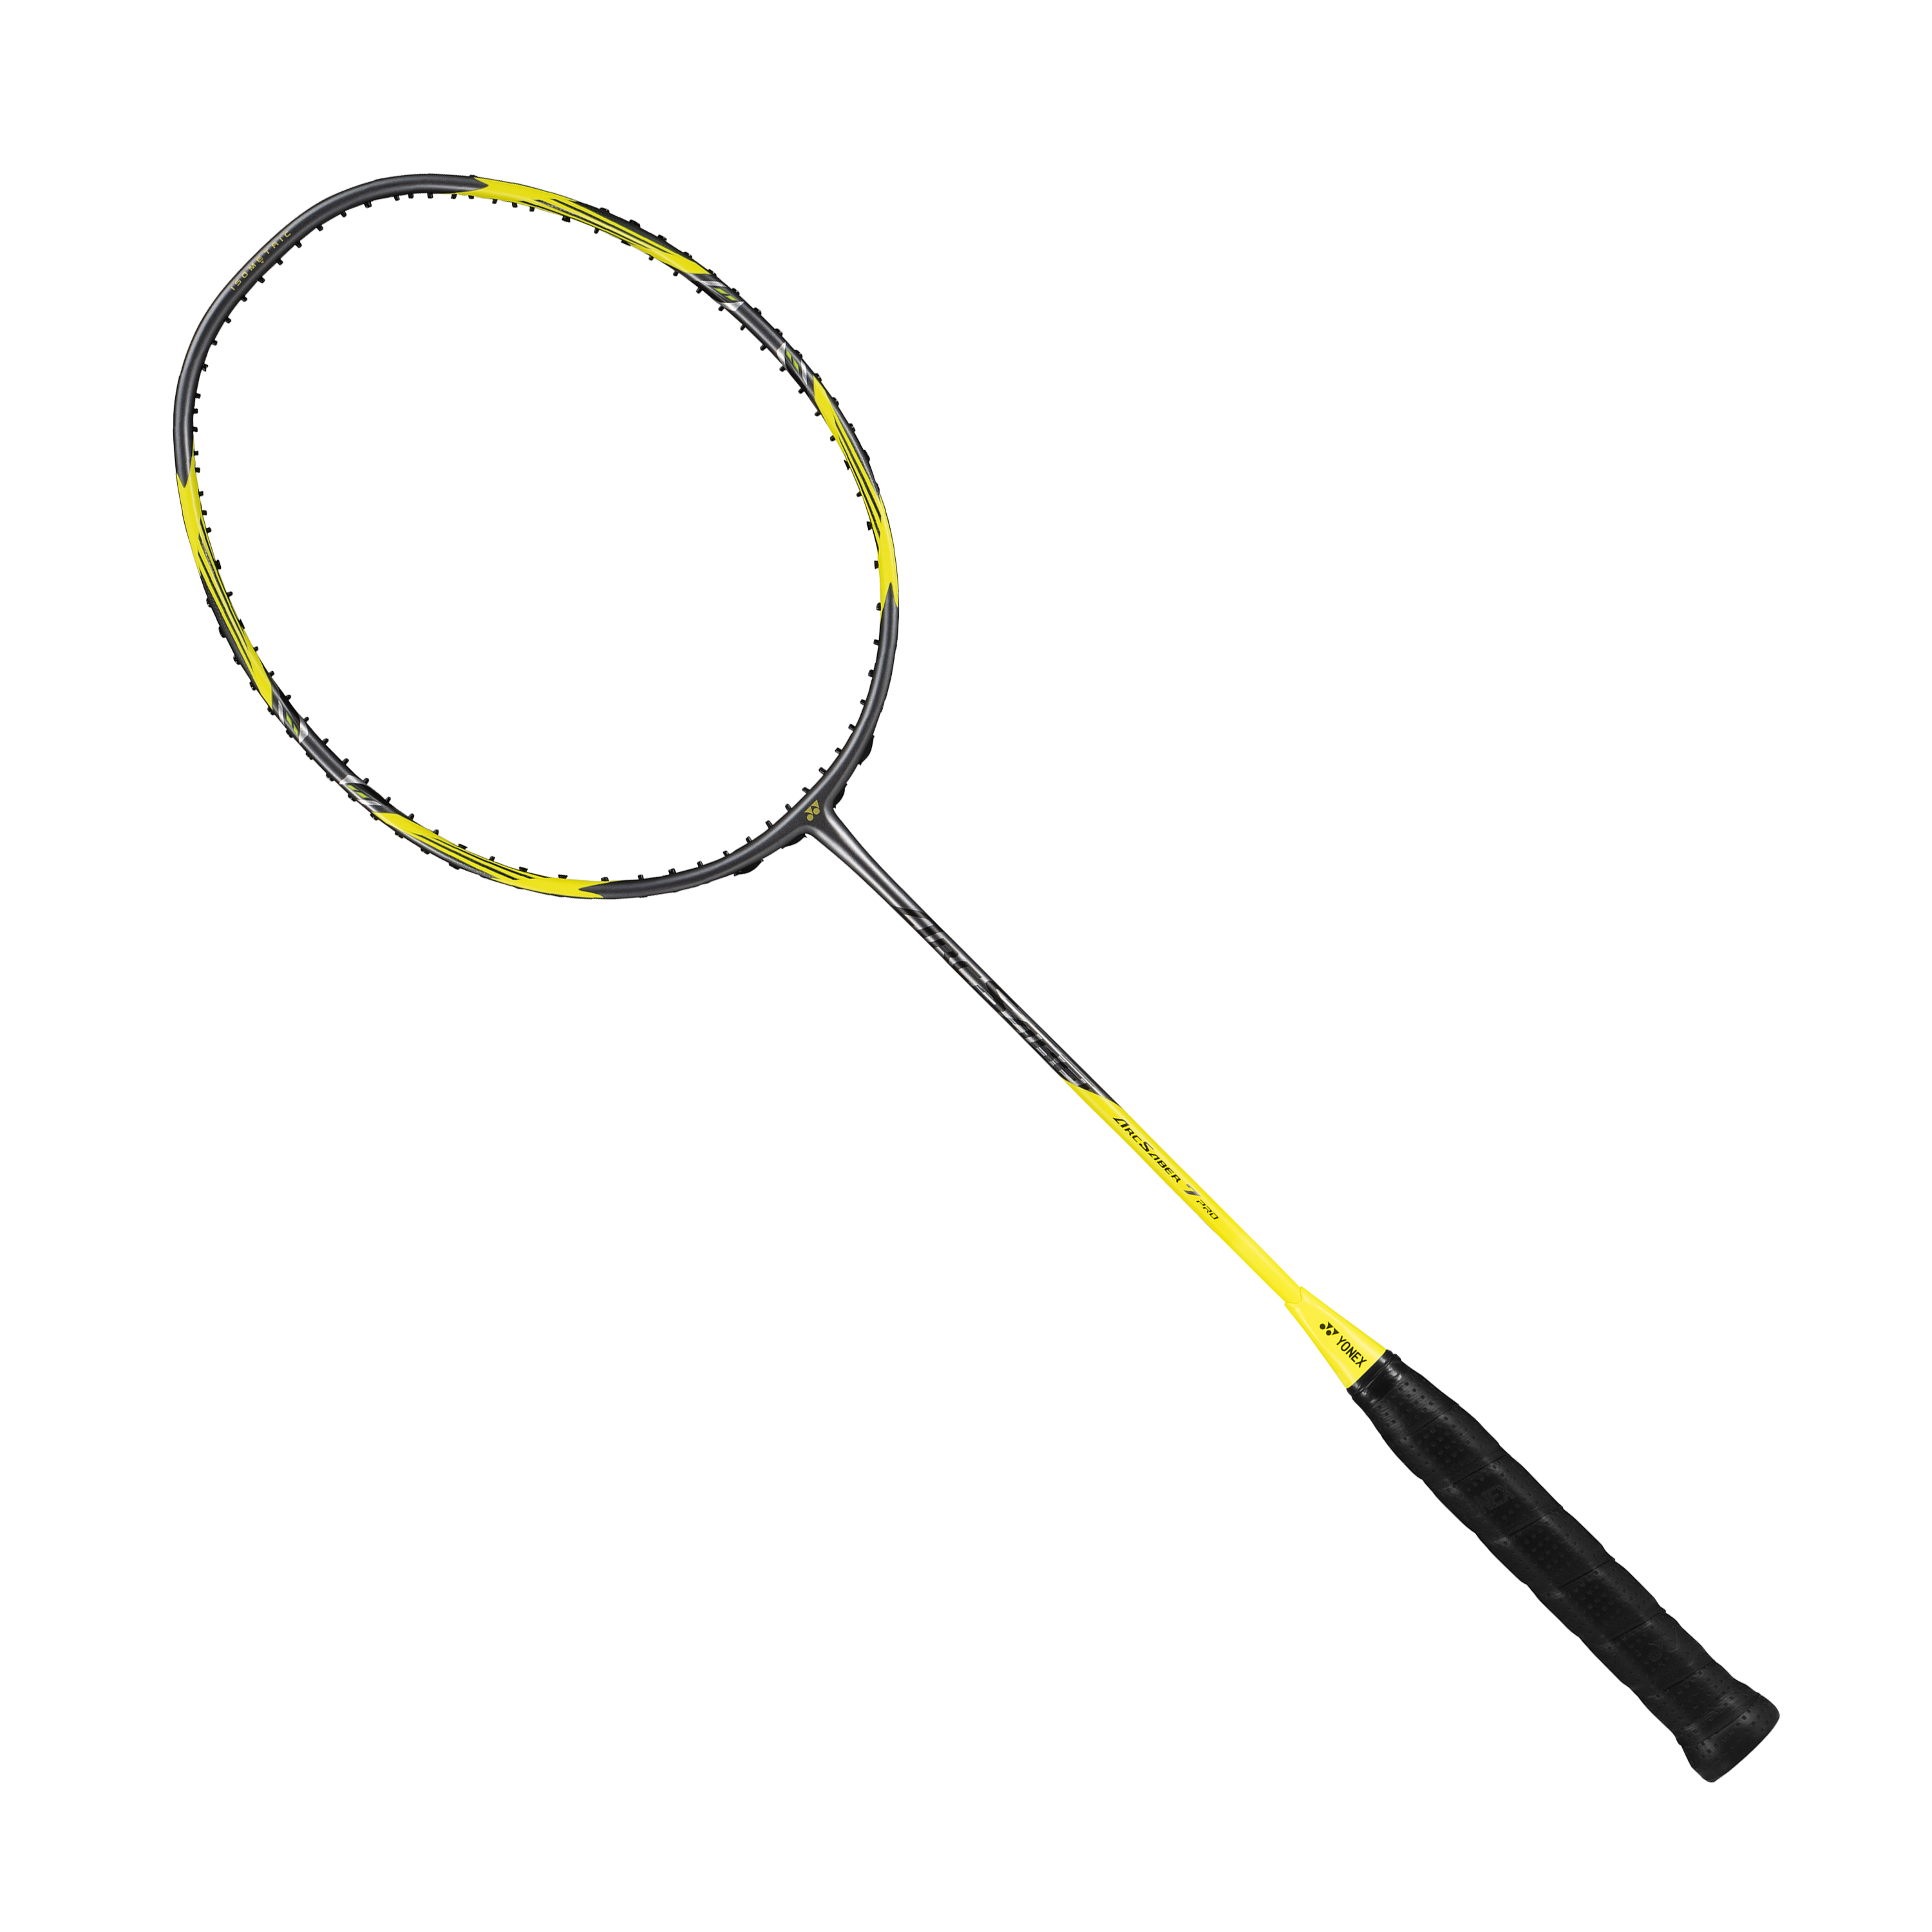 Yonex Arcsaber 11 Play Balanced Badminton Racquet 4U(83g)G6 (Ready to